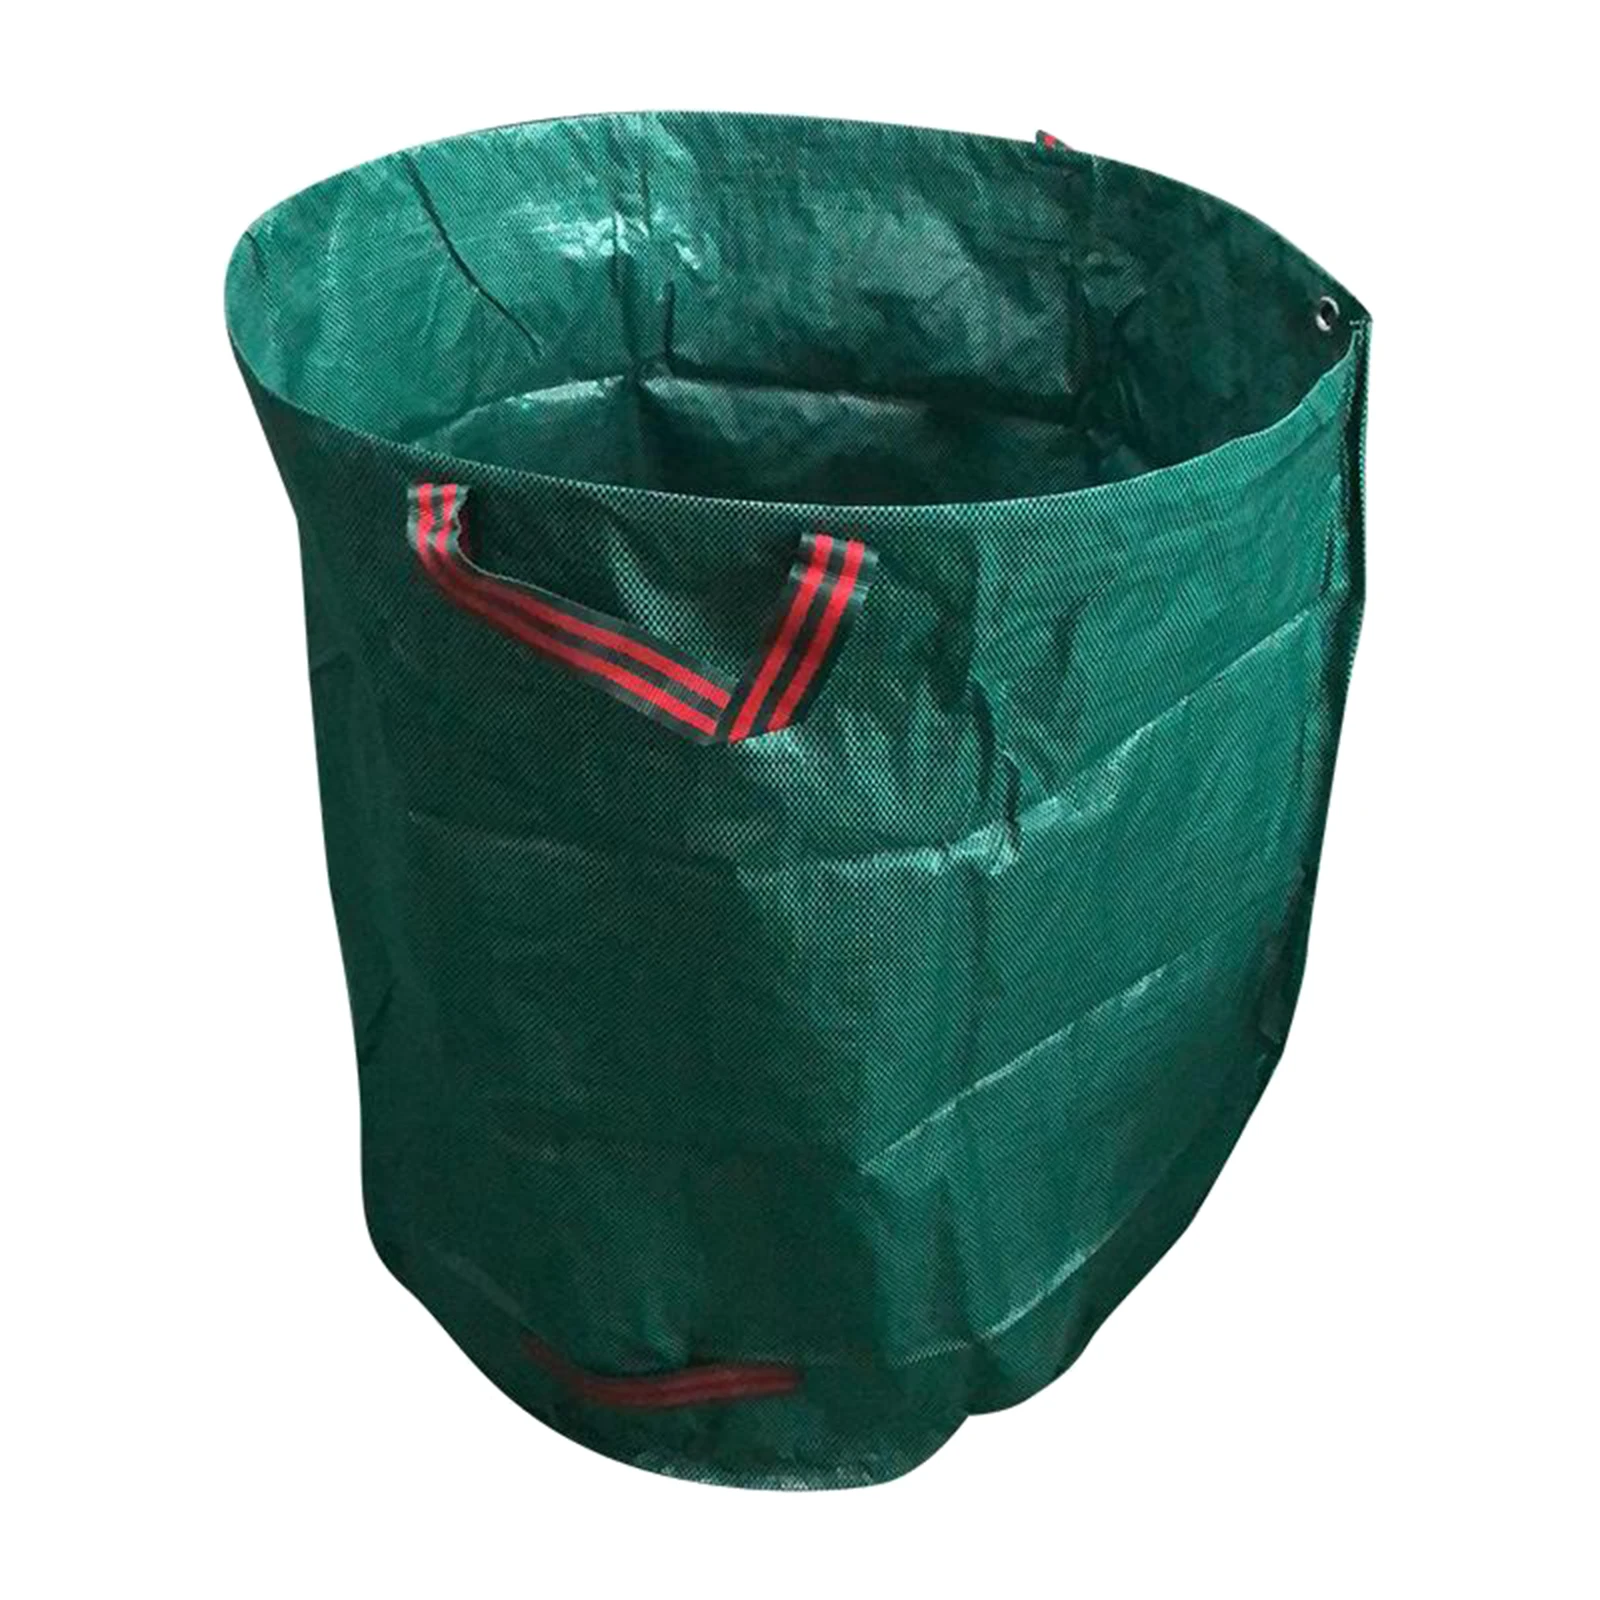 2 PCS 72 Gallons Garden Waste Bag Professional Reusable Lawn Garden Leaf Bag USA 